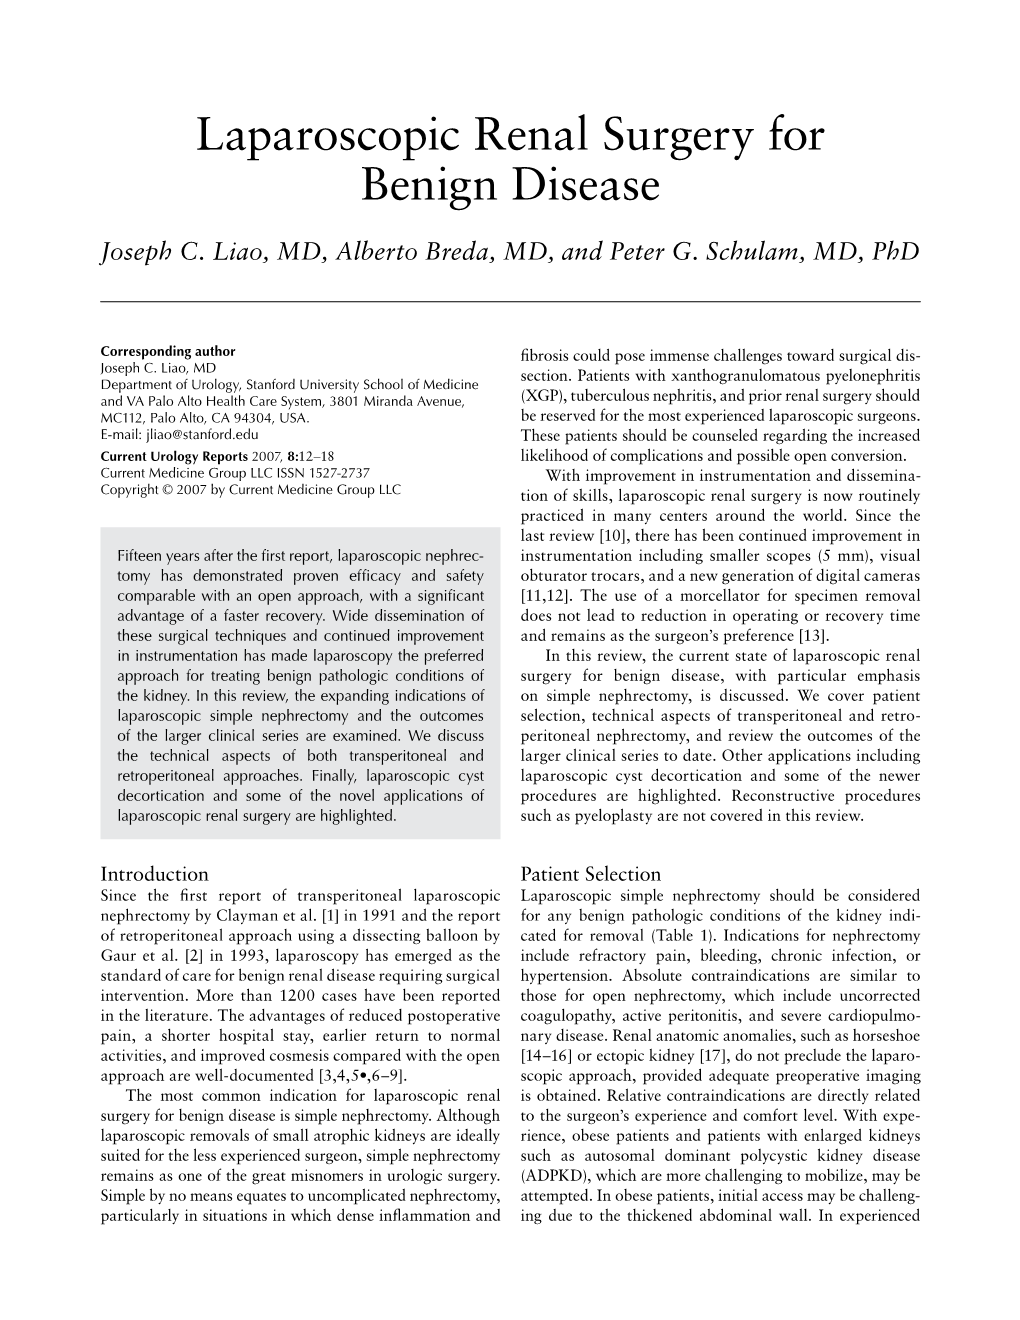 Laparoscopic Renal Surgery for Benign Disease